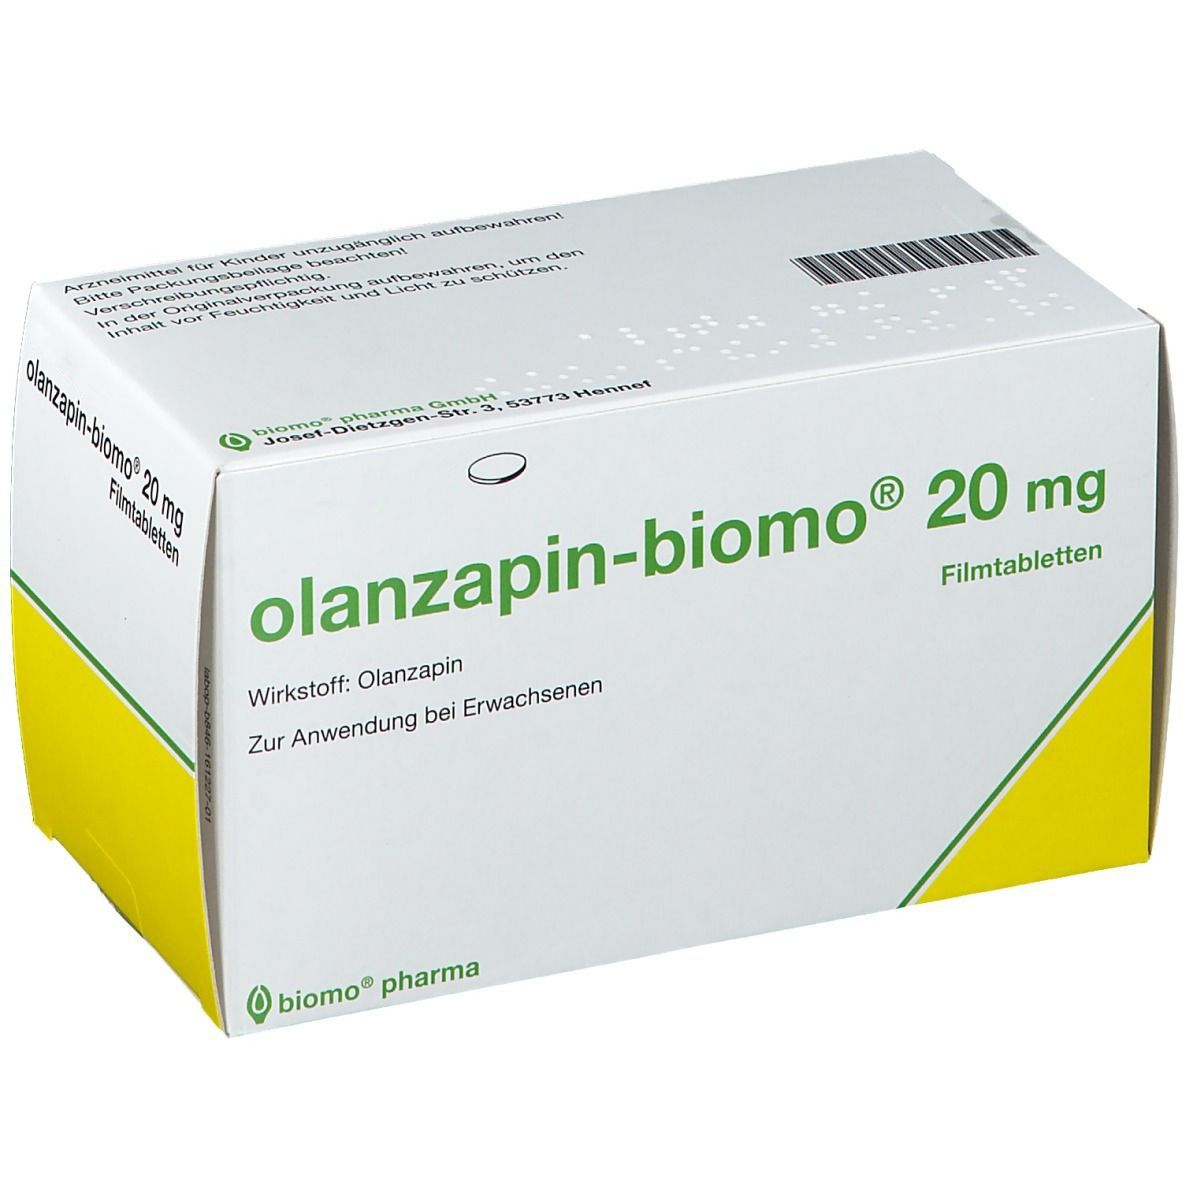 olanzapin-biomo® 20 mg